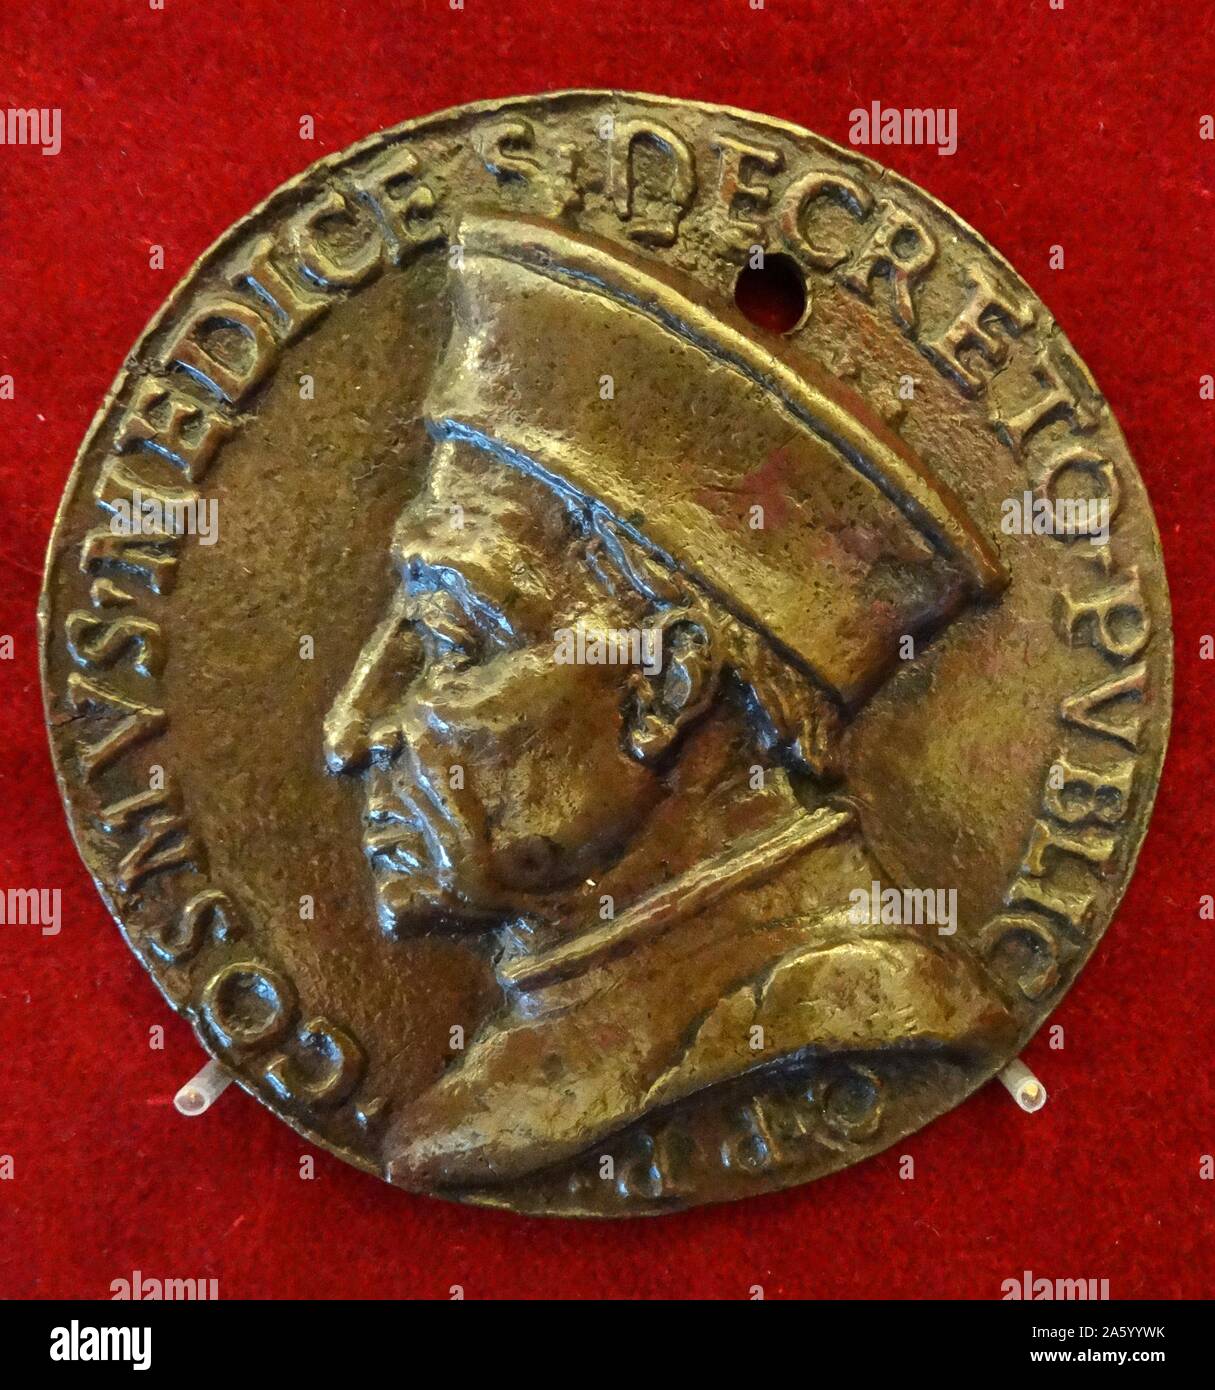 Coin depicting Lorenzo de' Medici (1449-1492) Italian statesman and de facto ruler of the Florentine Republic during the Italian Renaissance. Dated 15th Century Stock Photo